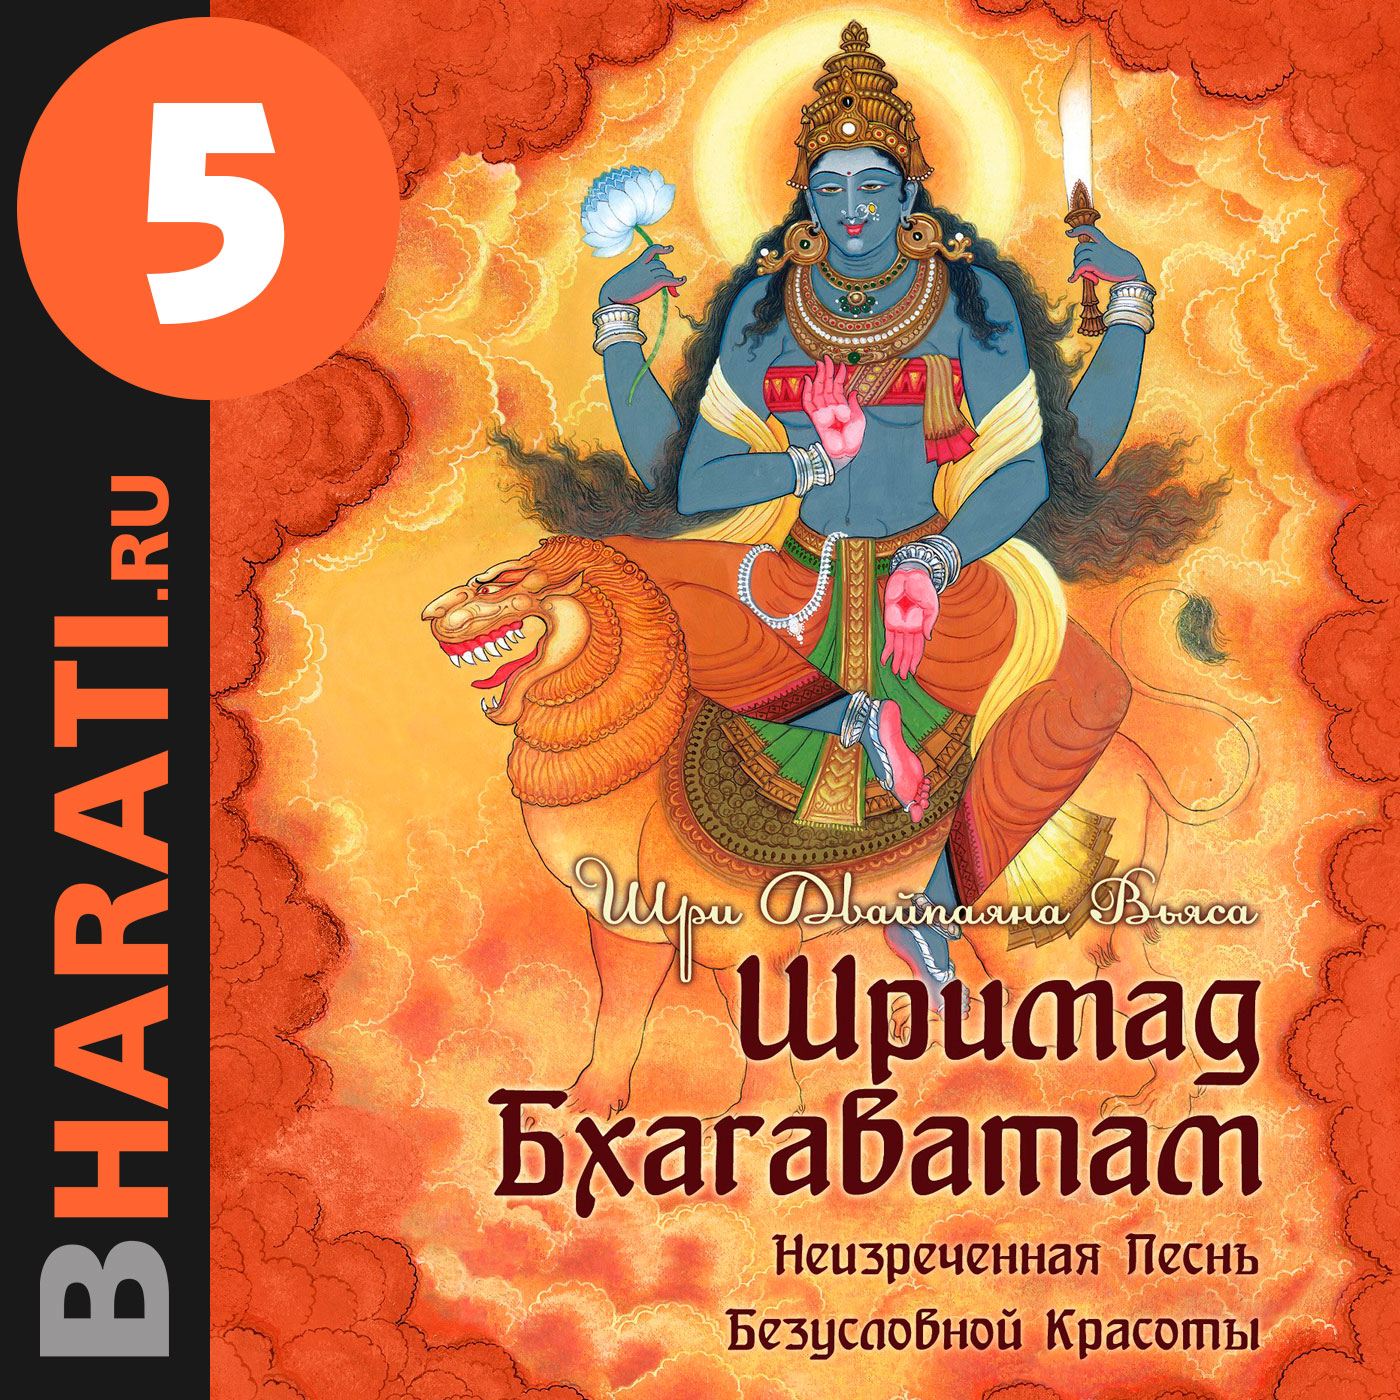 Аудиокнига "Шримад Бхагаватам". Книга 5: "Числа"